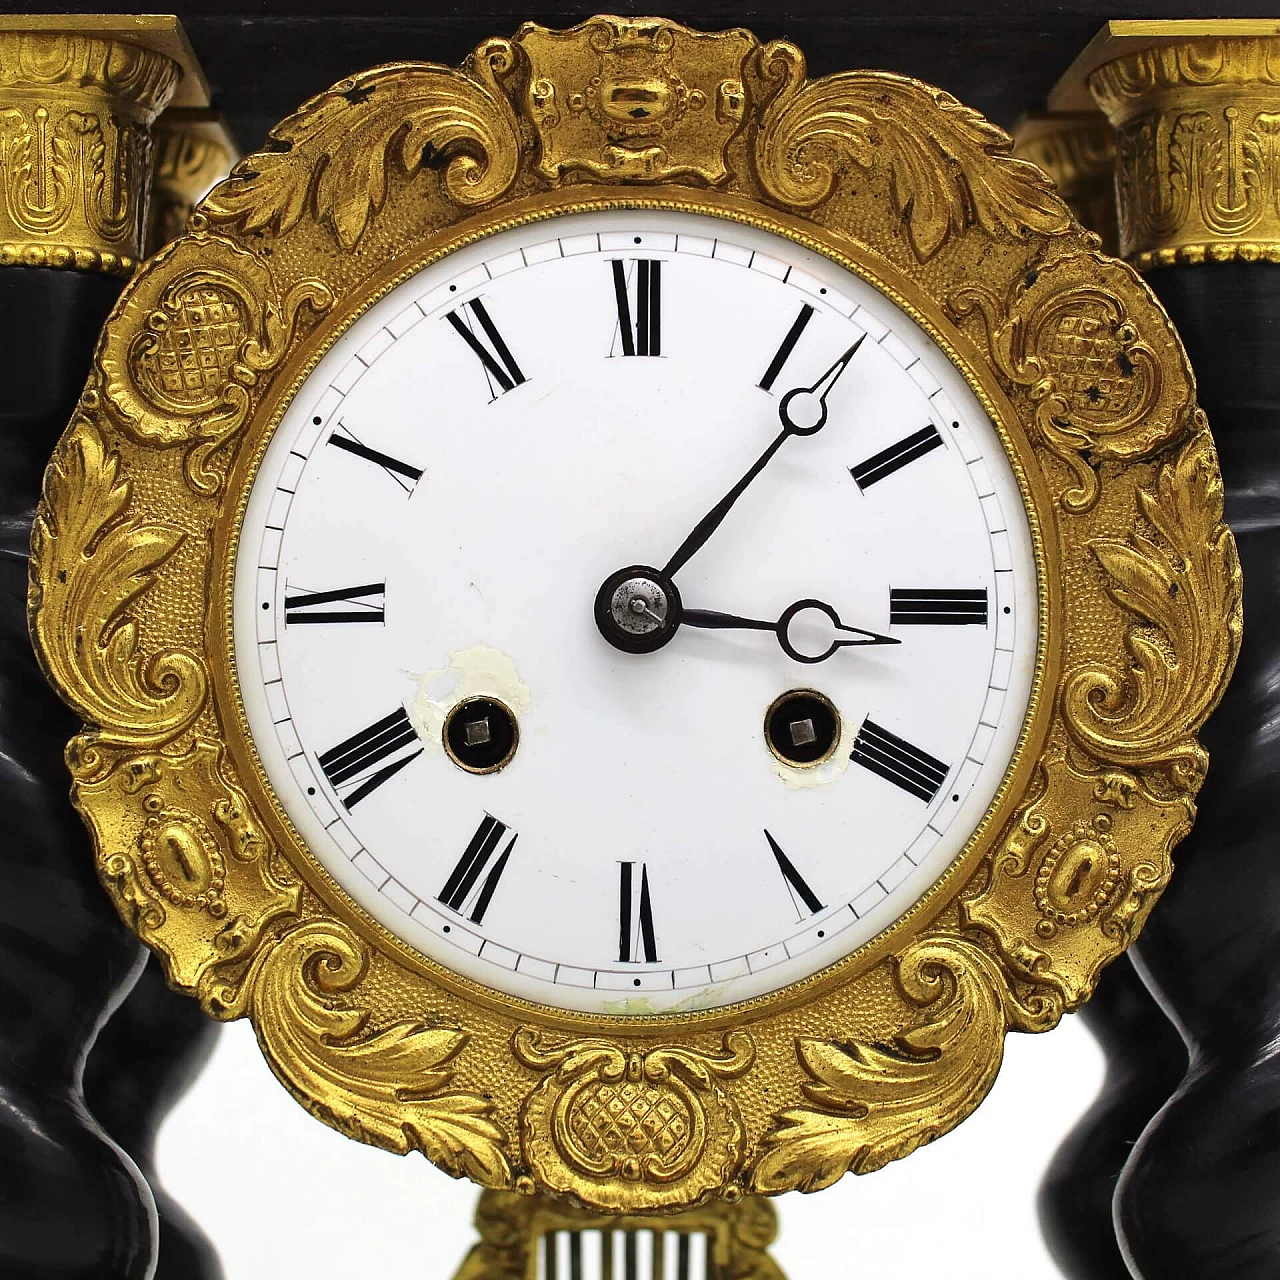 Napoleon III pendulum clock in inlaid ebonized wood and bronze, 19th century 1254239